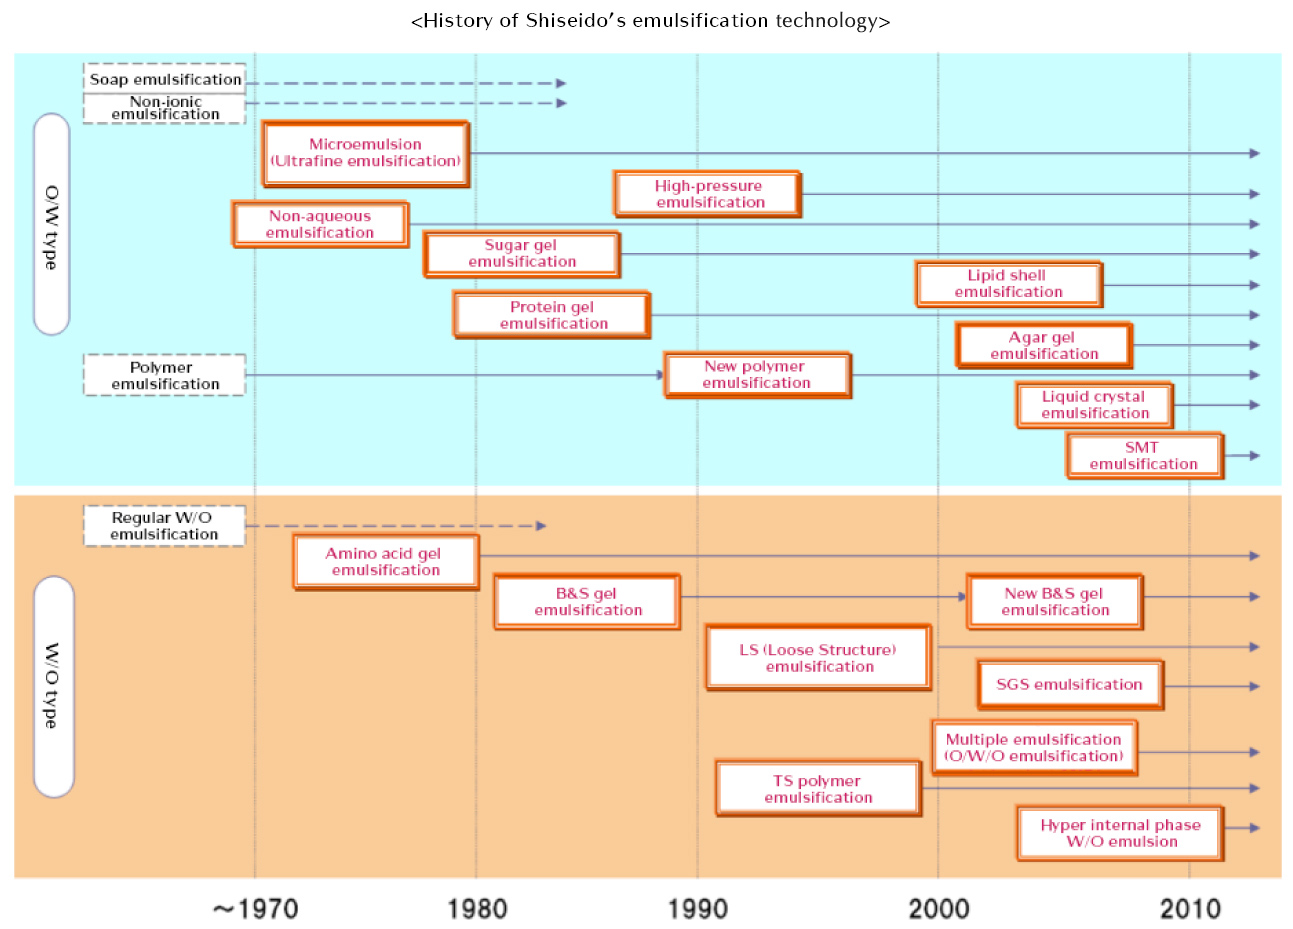 History of Shiseido’s emulsification technology